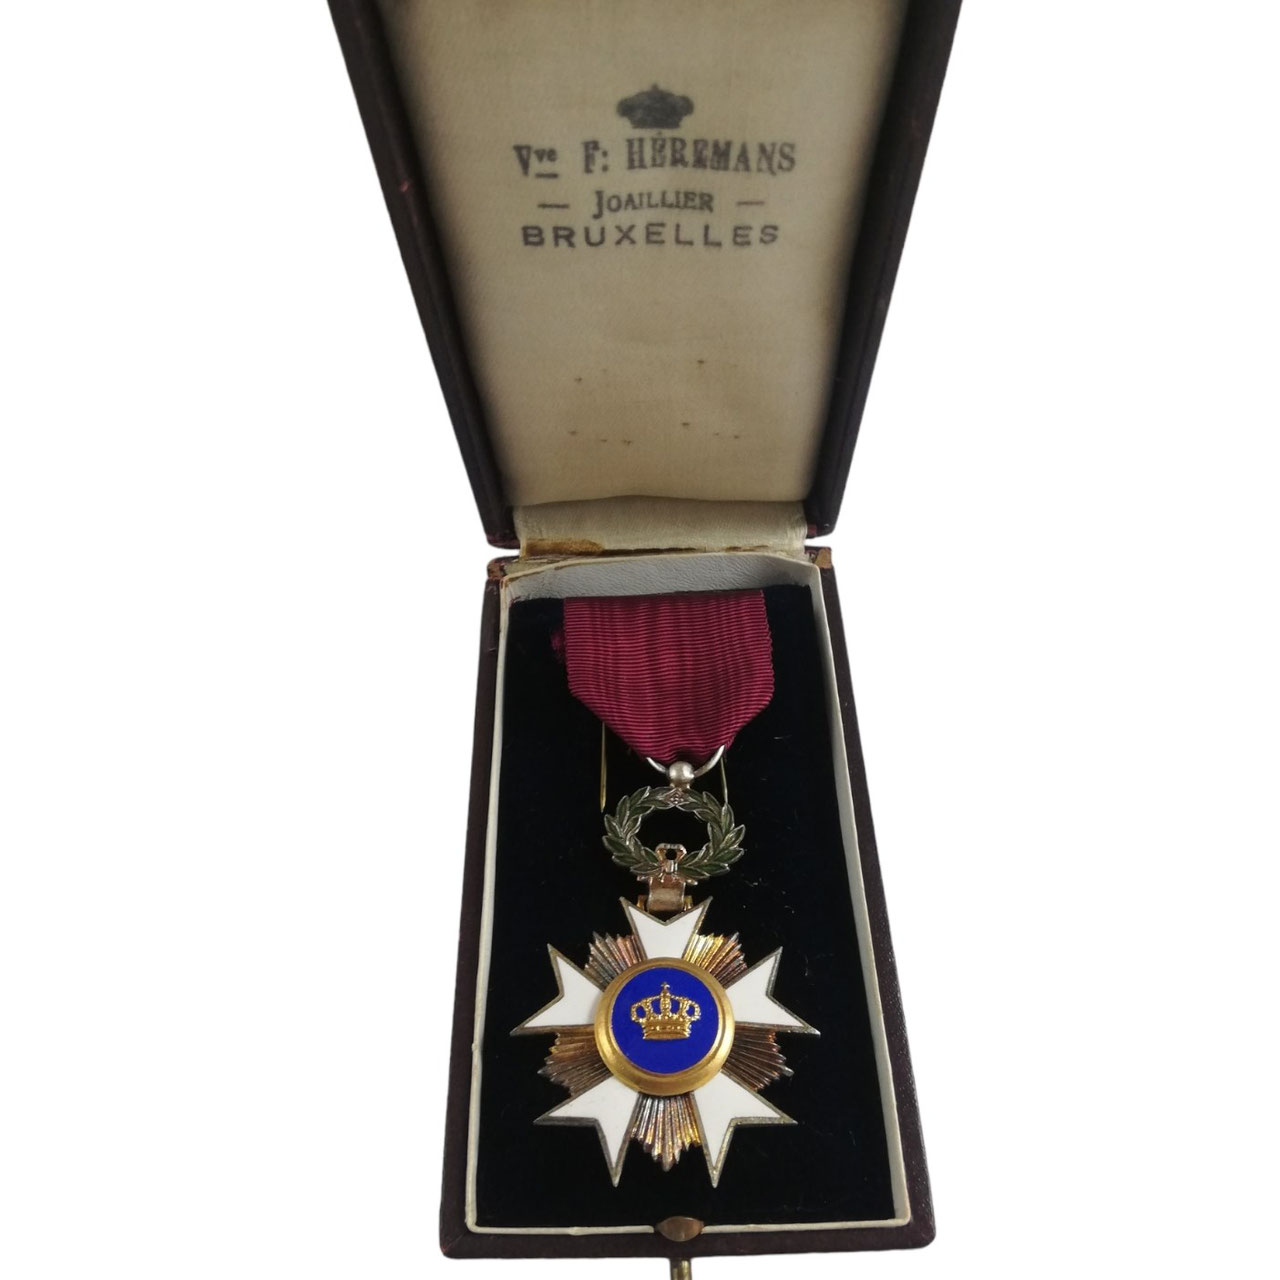 Medailles & Oorkonden - Military Memorabilia! Fair Prices, Good Quality!